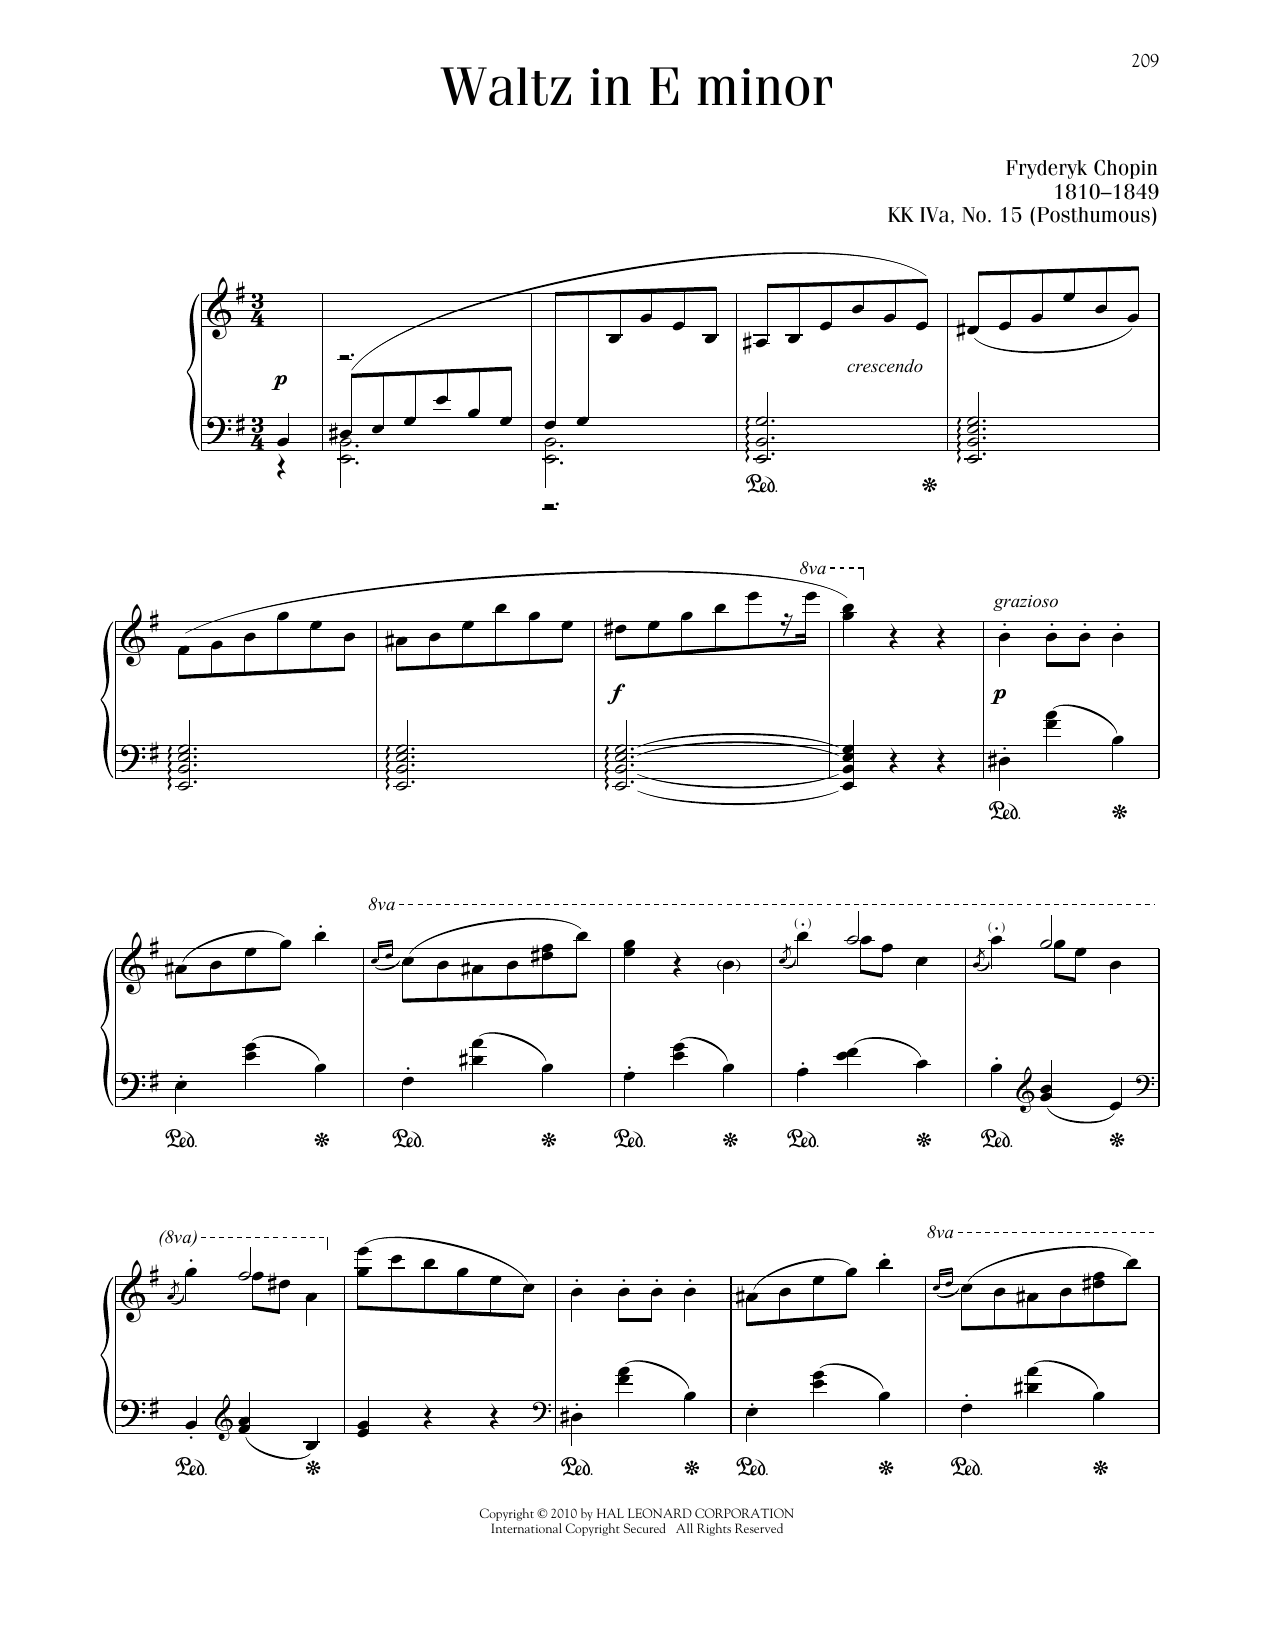 Frédéric Chopin Waltz In E Minor, KK. IVa, No. 15 sheet music notes printable PDF score